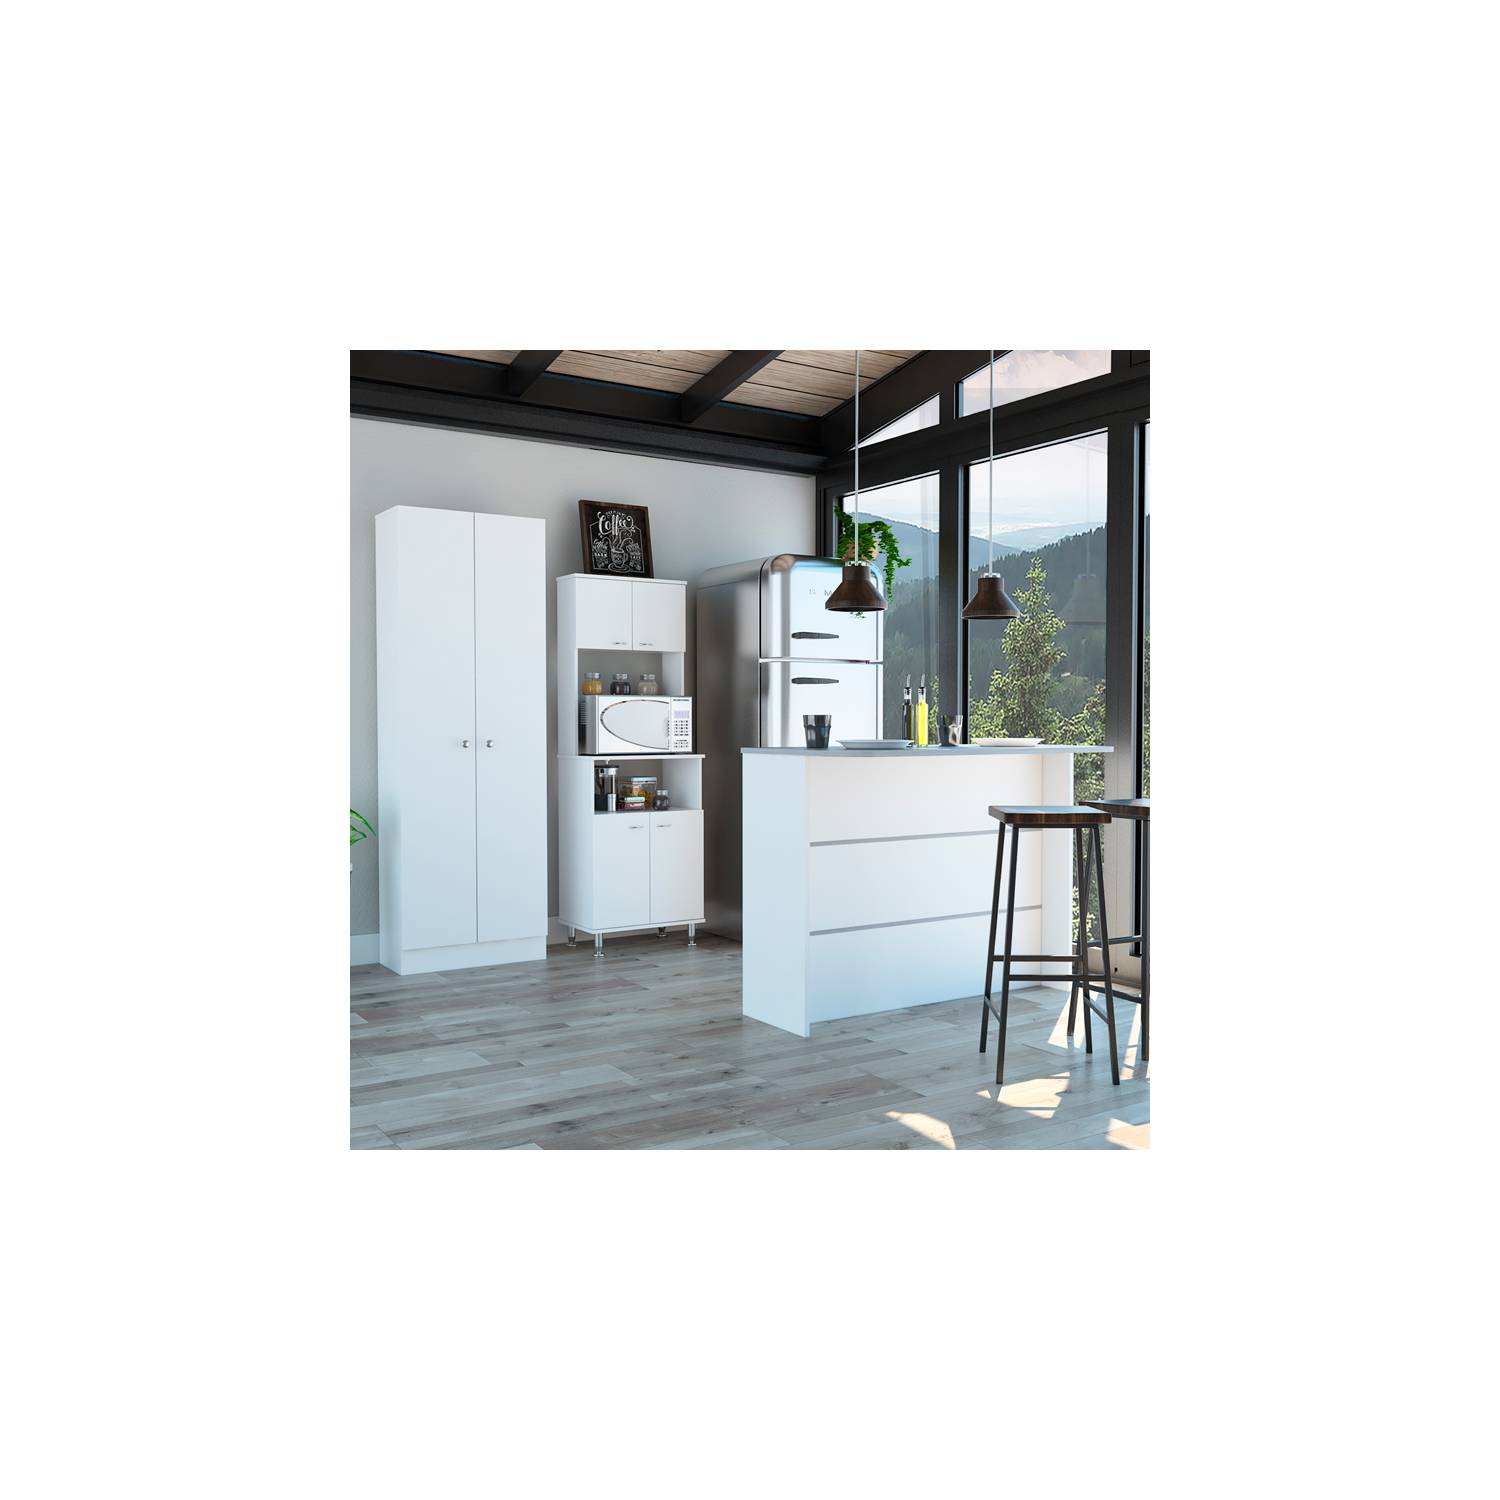 Combo: Kitchen 4 Mueble Microondas + Optimizador - Blanco